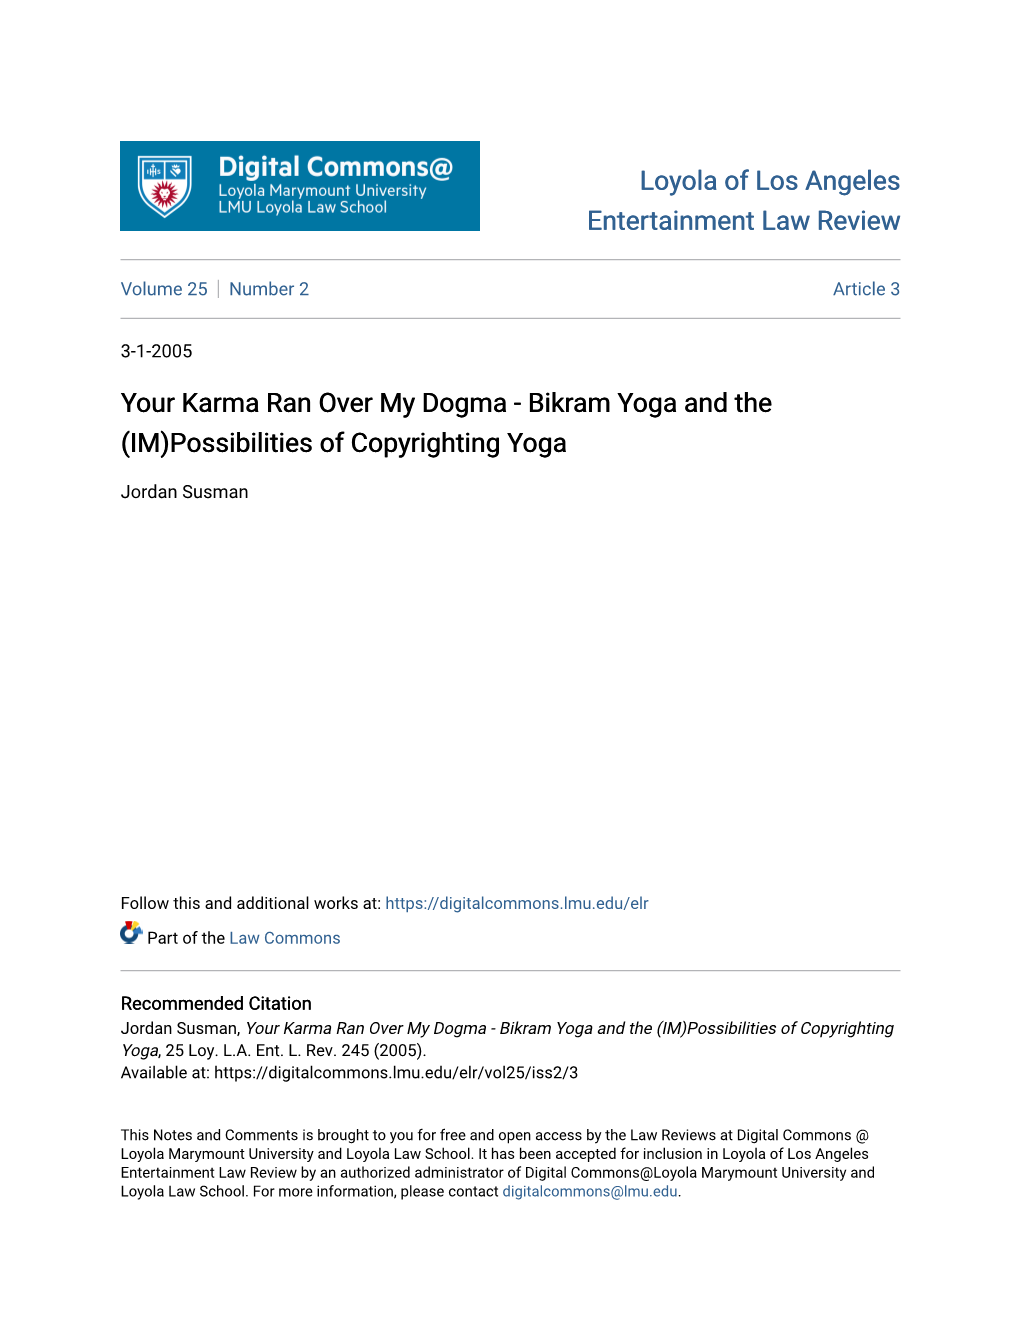 Bikram Yoga and the (IM)Possibilities of Copyrighting Yoga